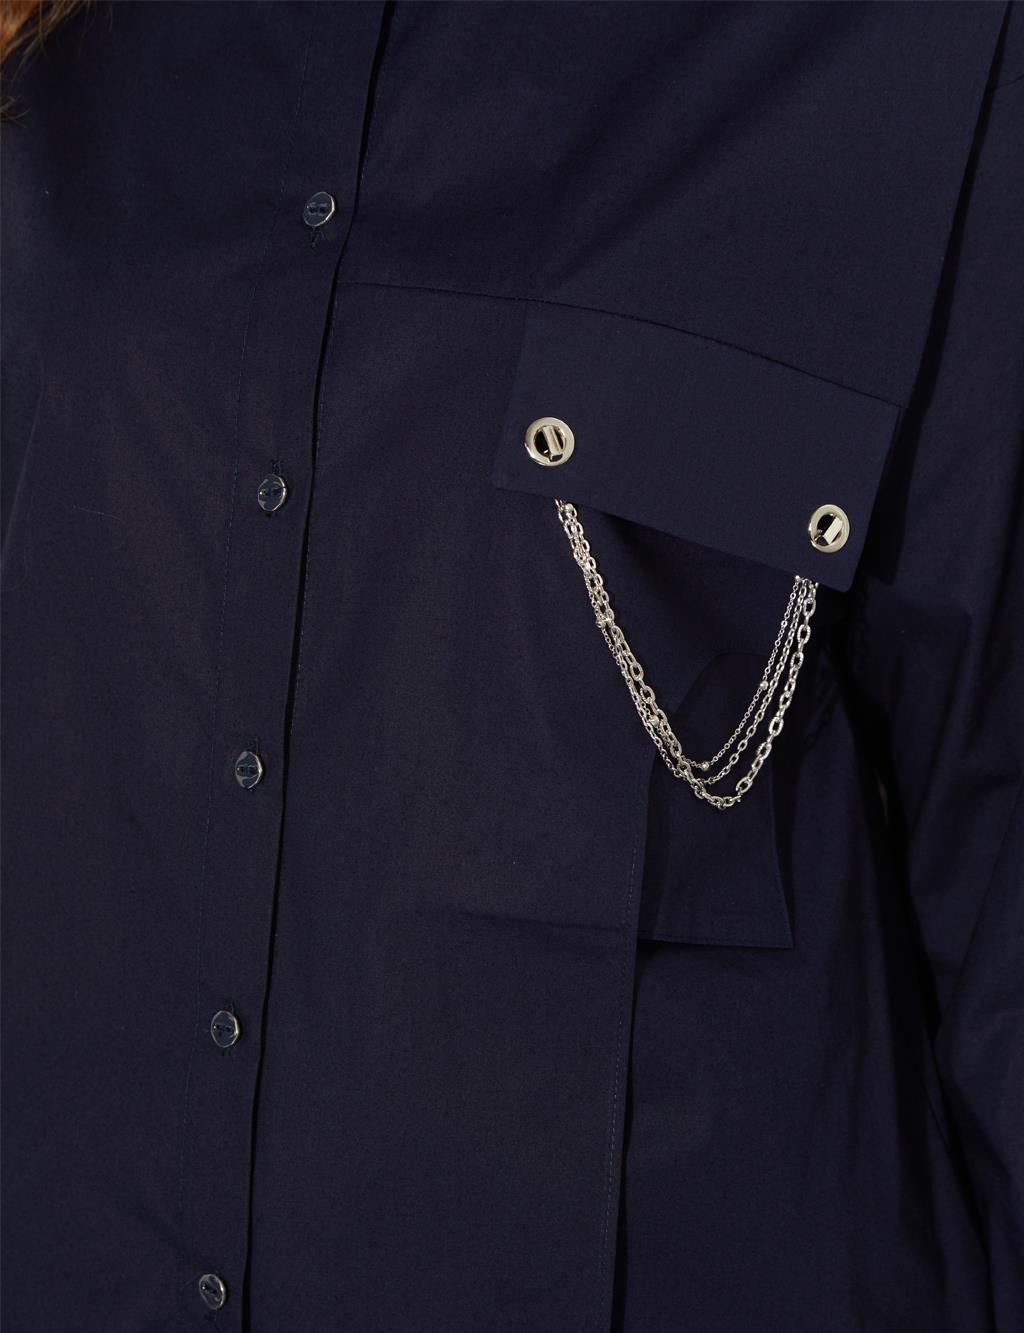 Chain Pocket Detailed Shirt Dark Navy